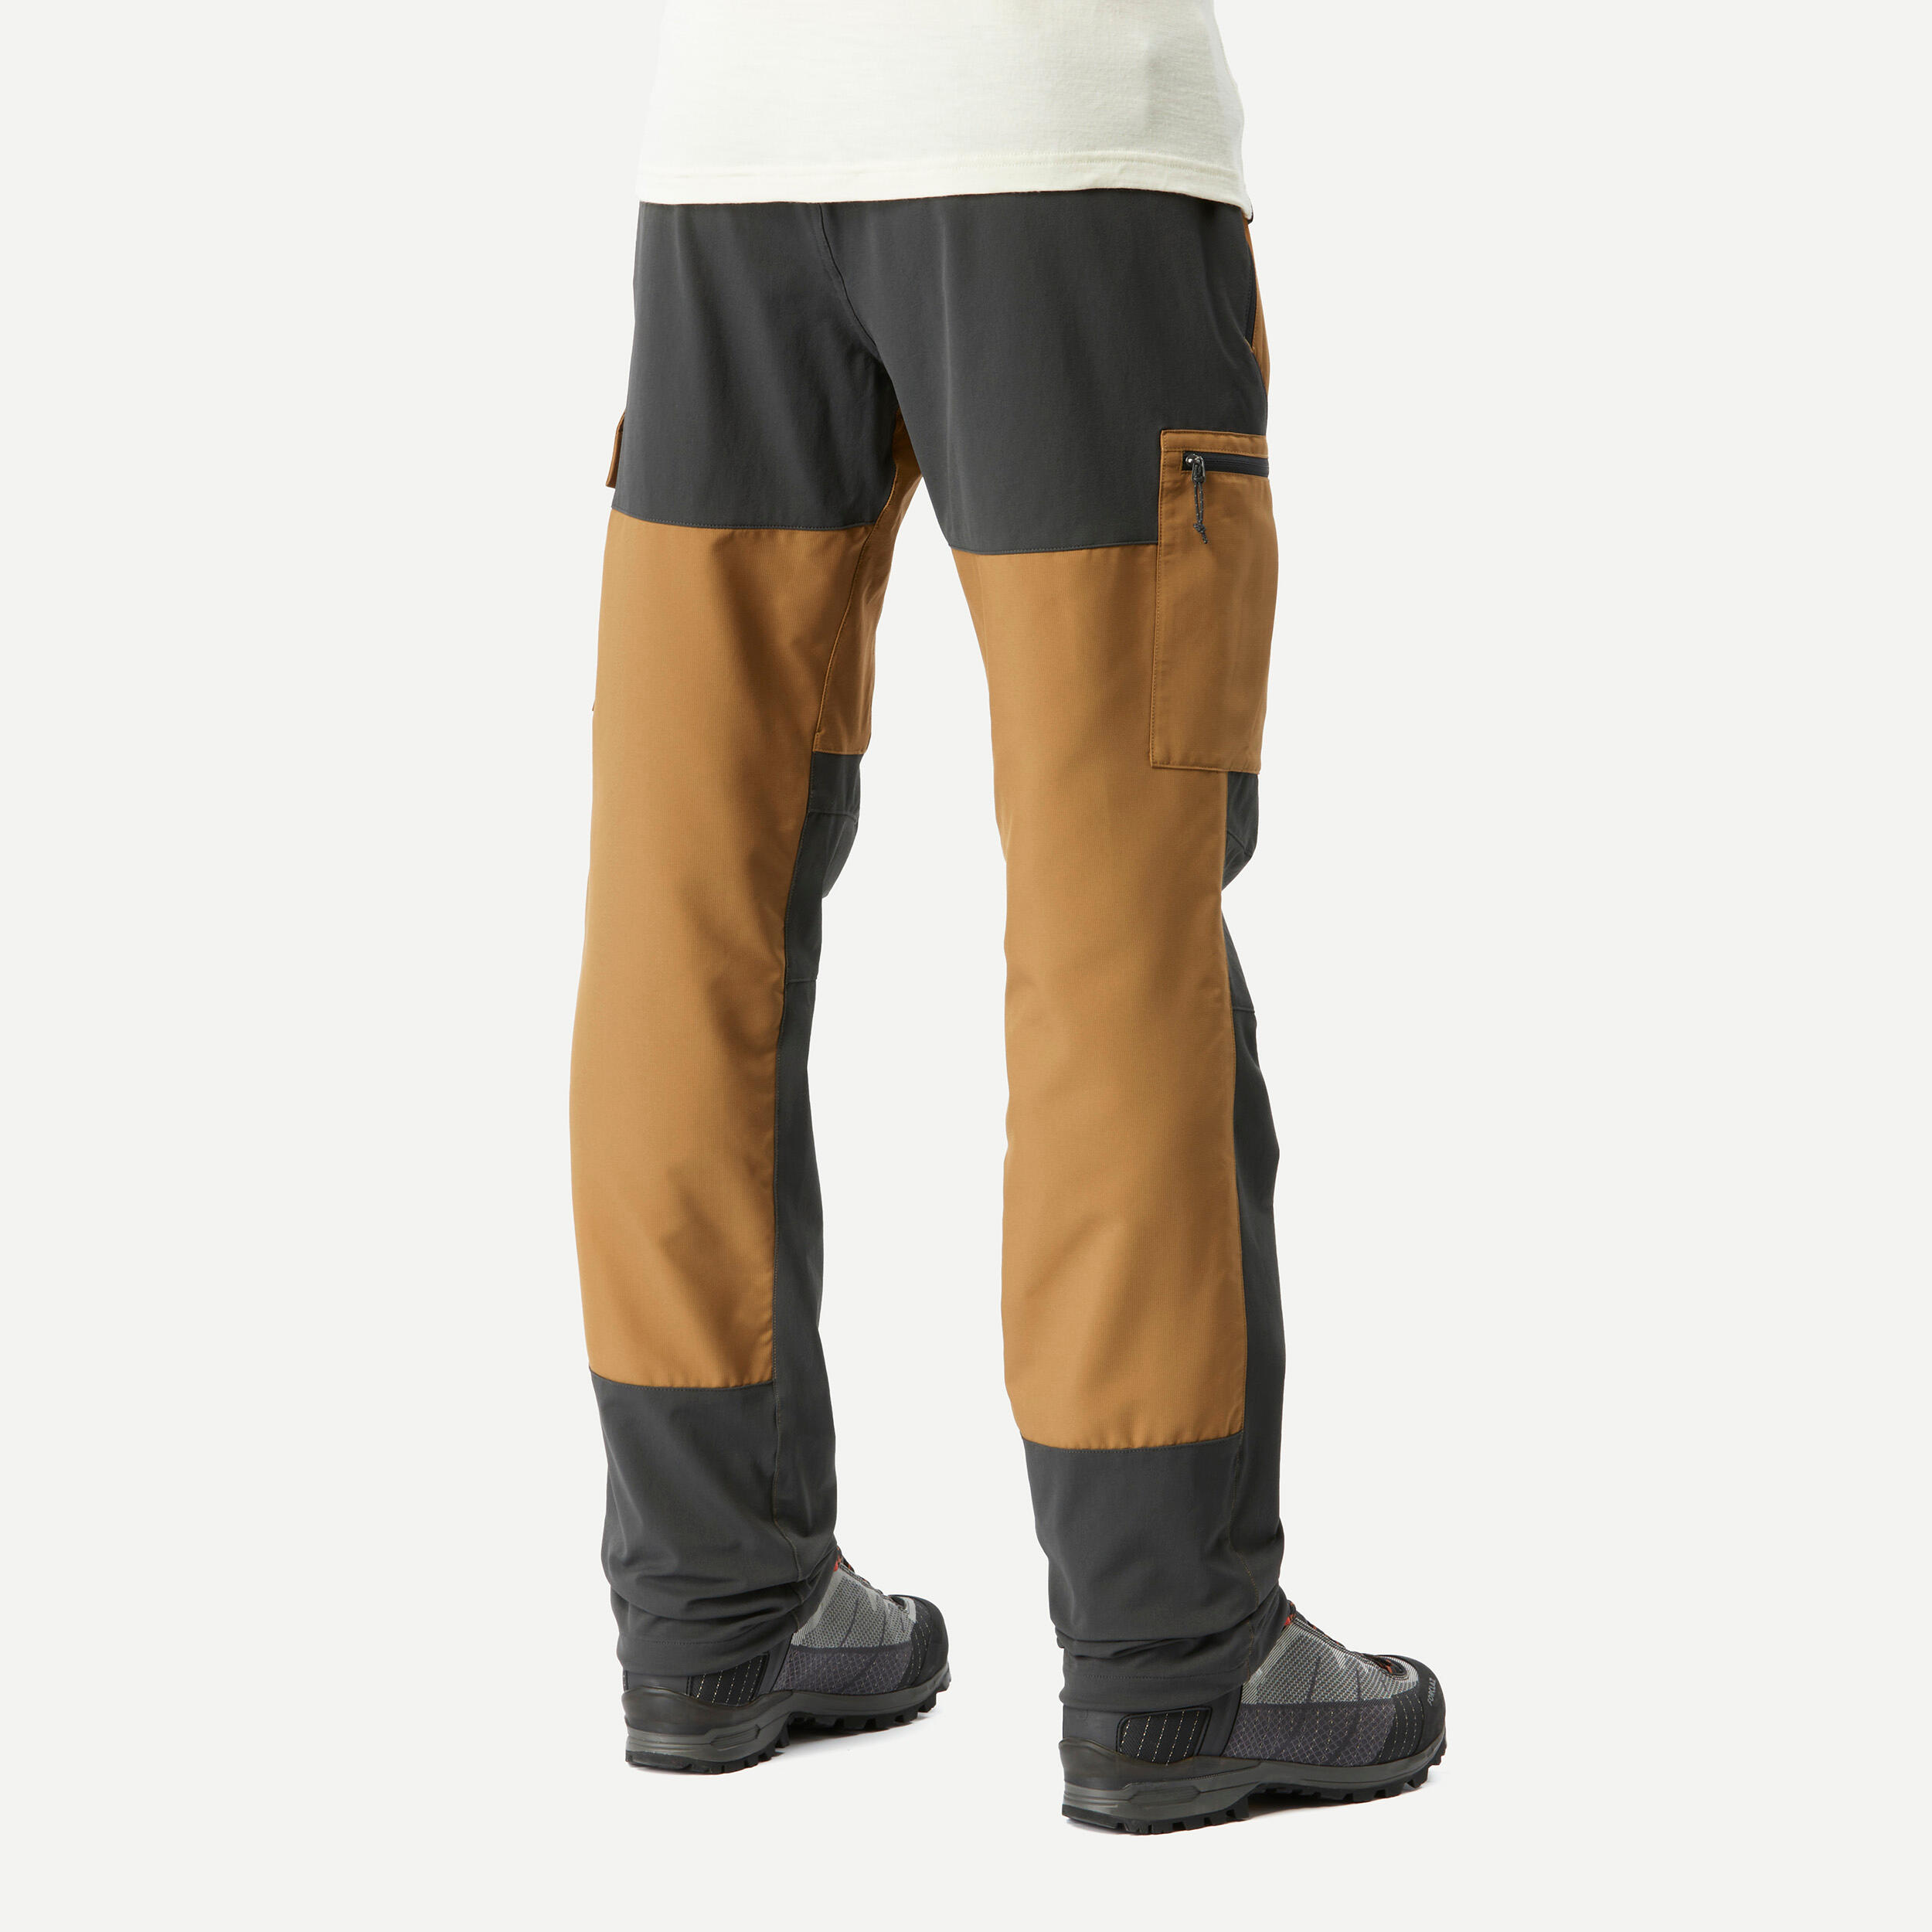 Red Kap Durable Pants Performance Shop Heavy Duty Men's Industrial Uniform  | eBay